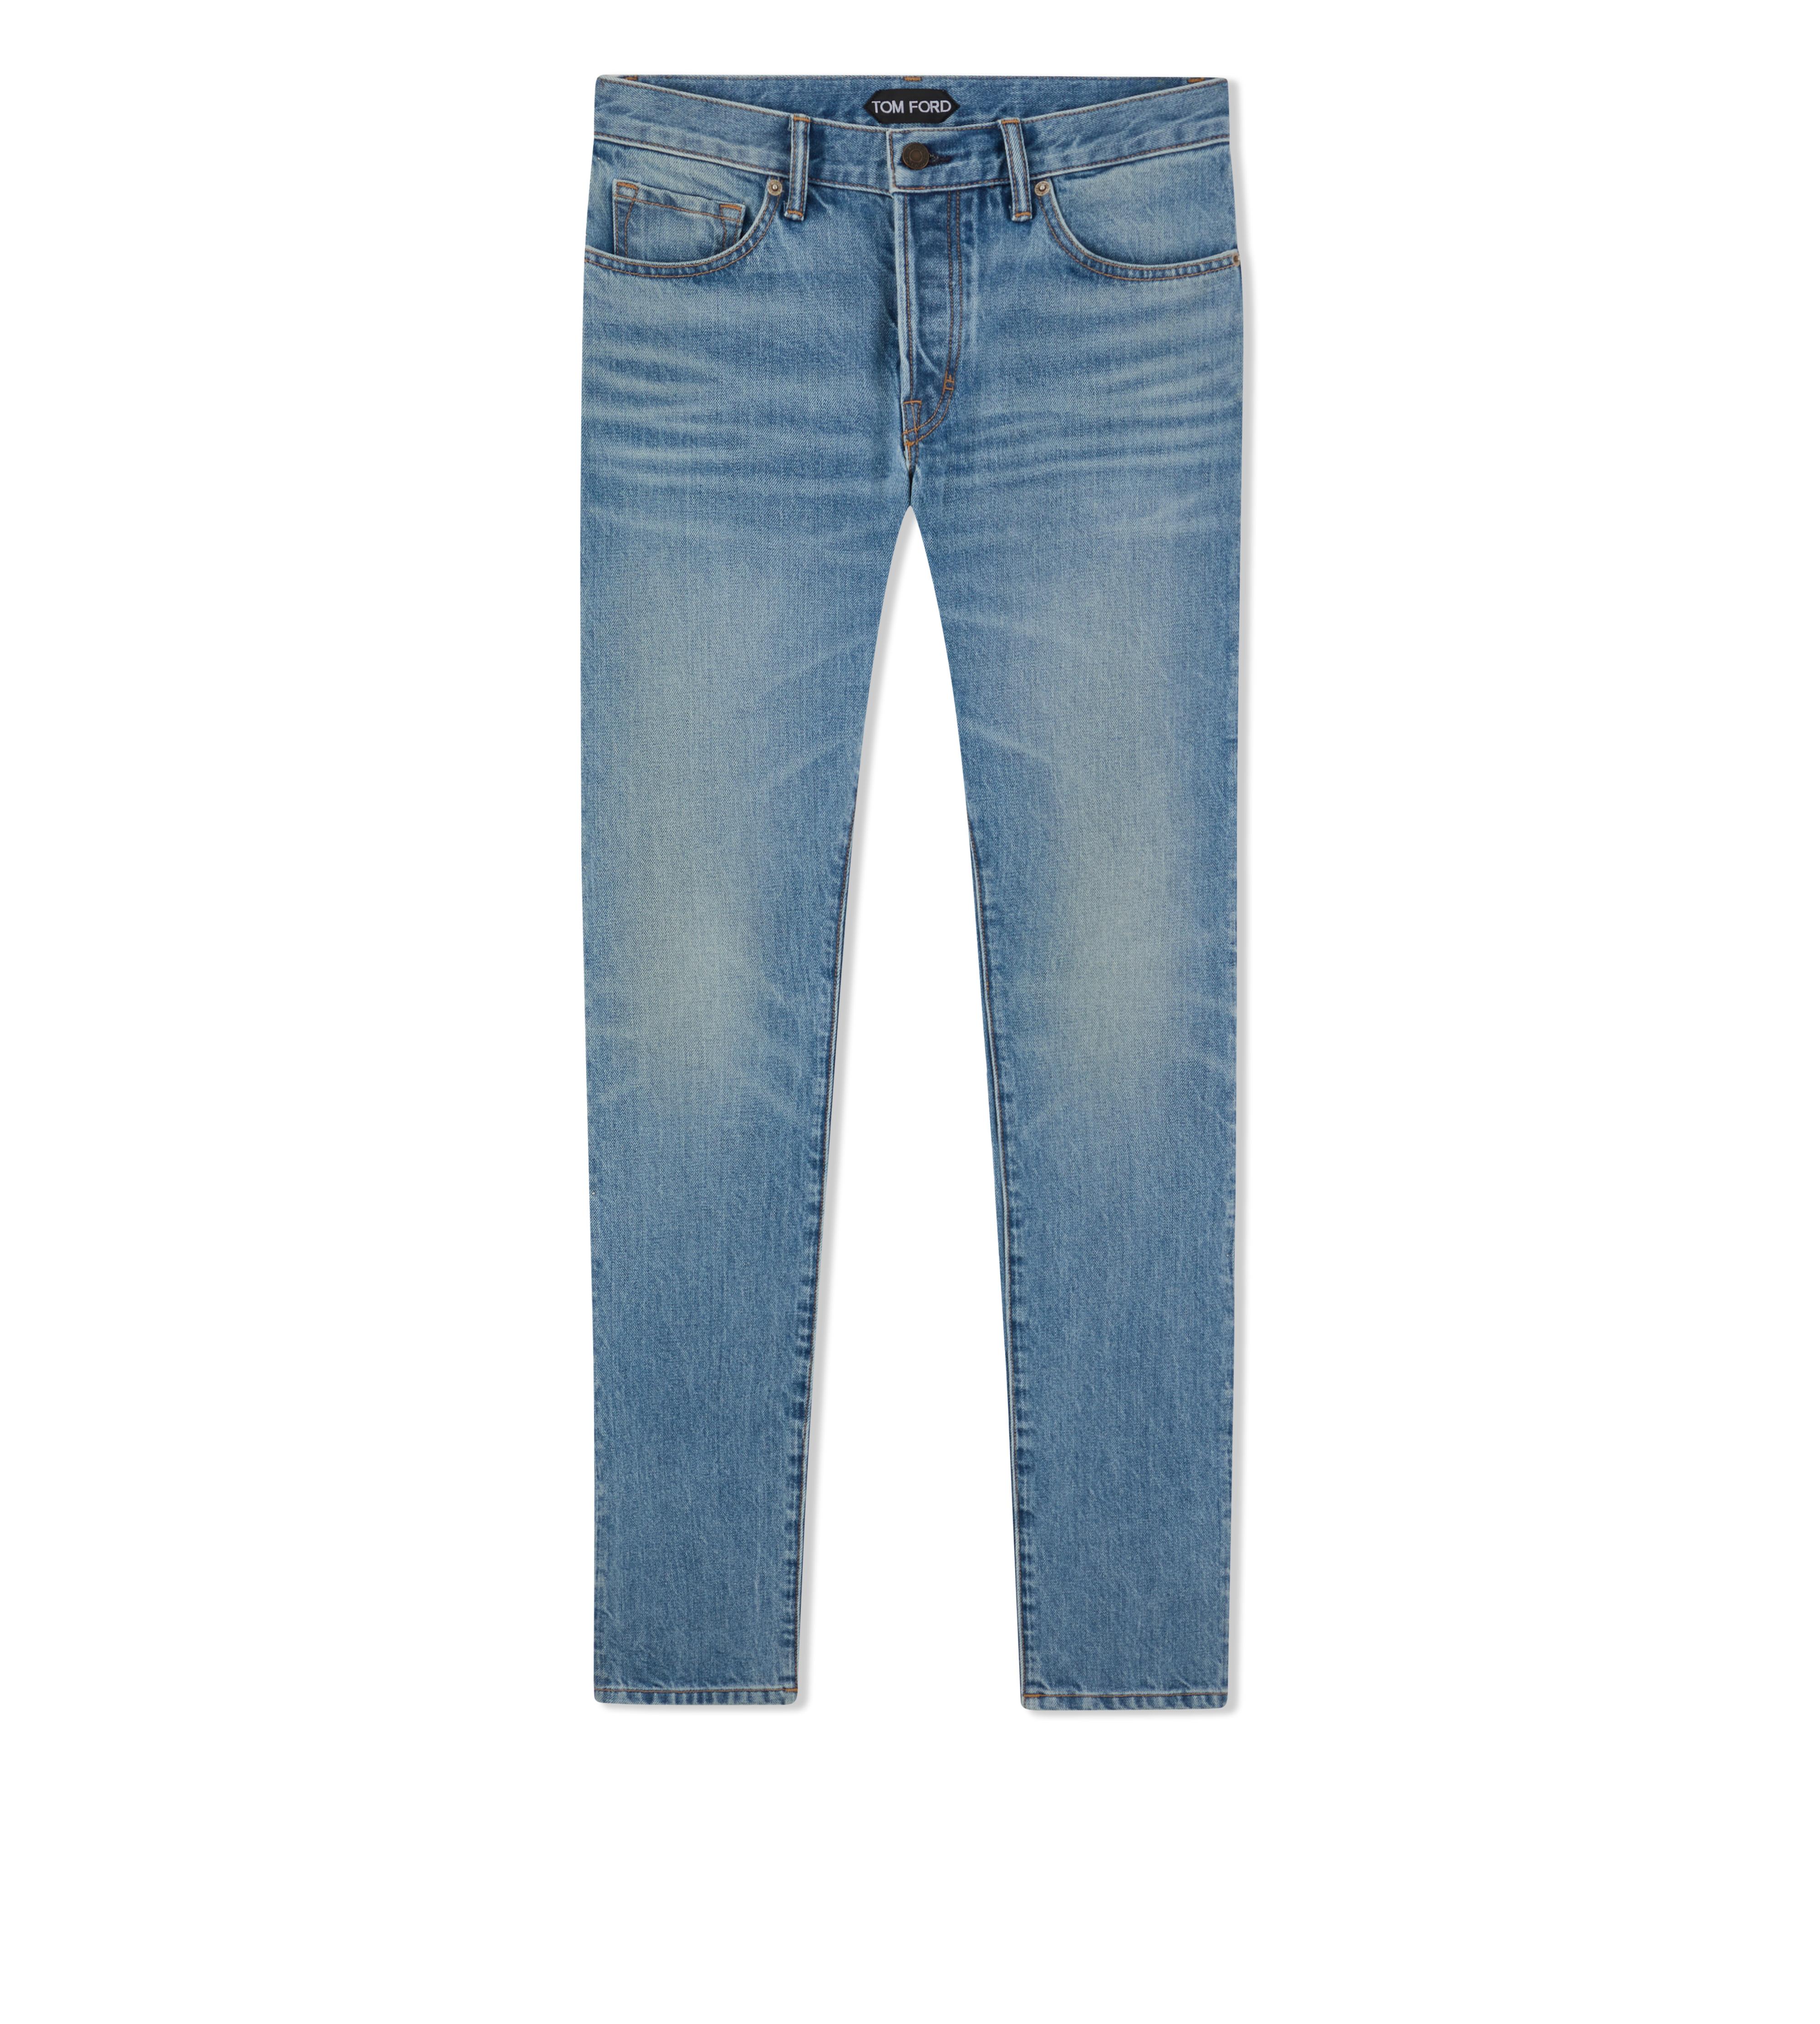 Jeans - TOM FORD | Men's Jeans 